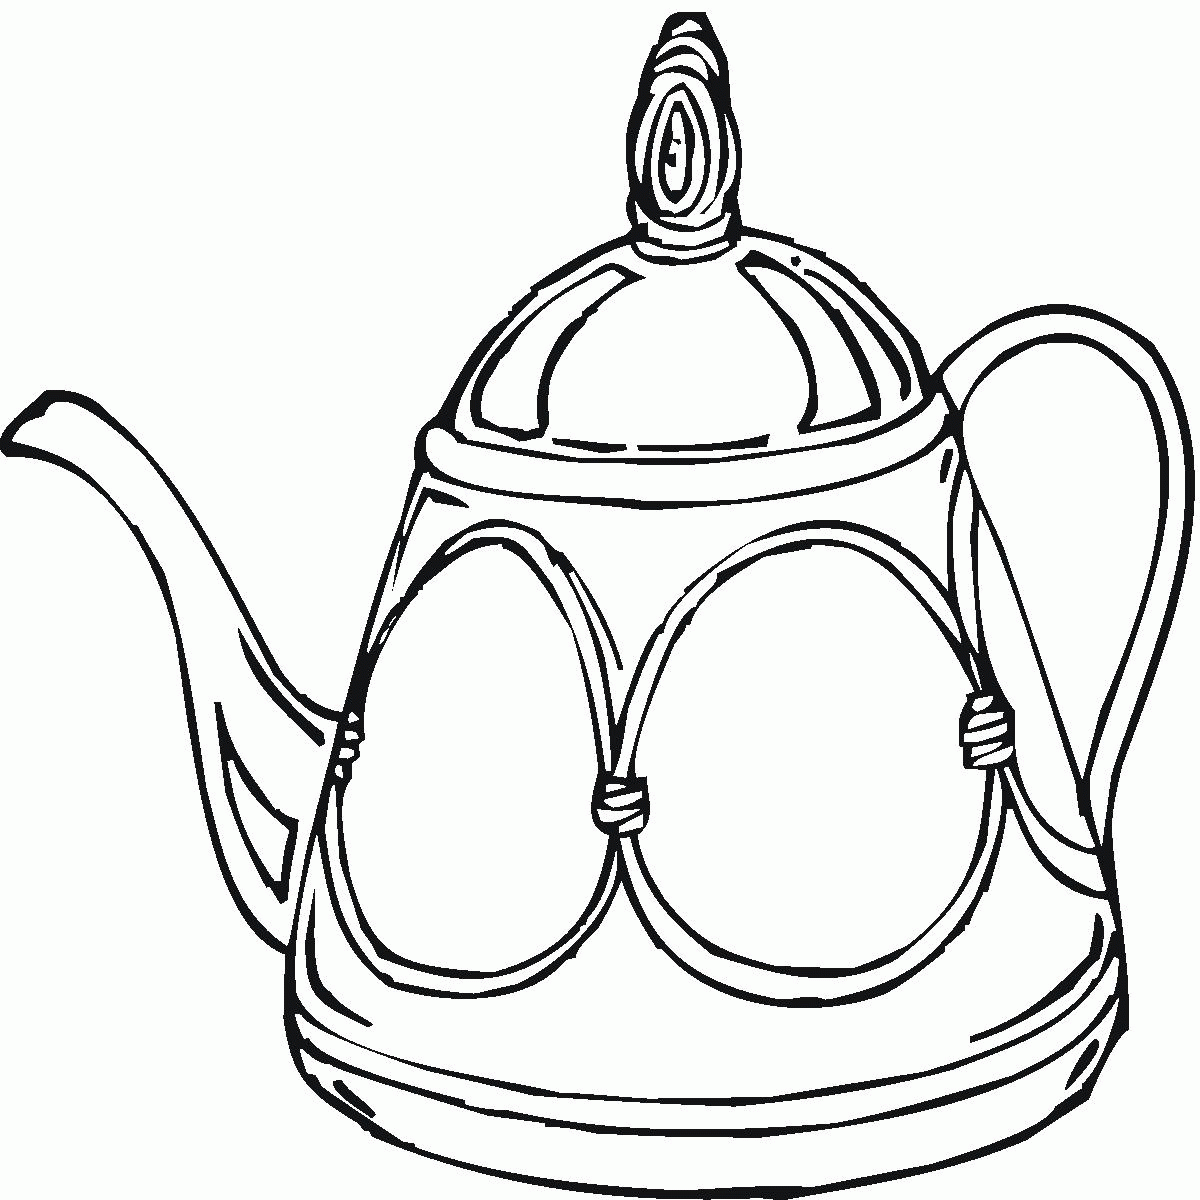 Teapot Coloring Page - ClipArt Best